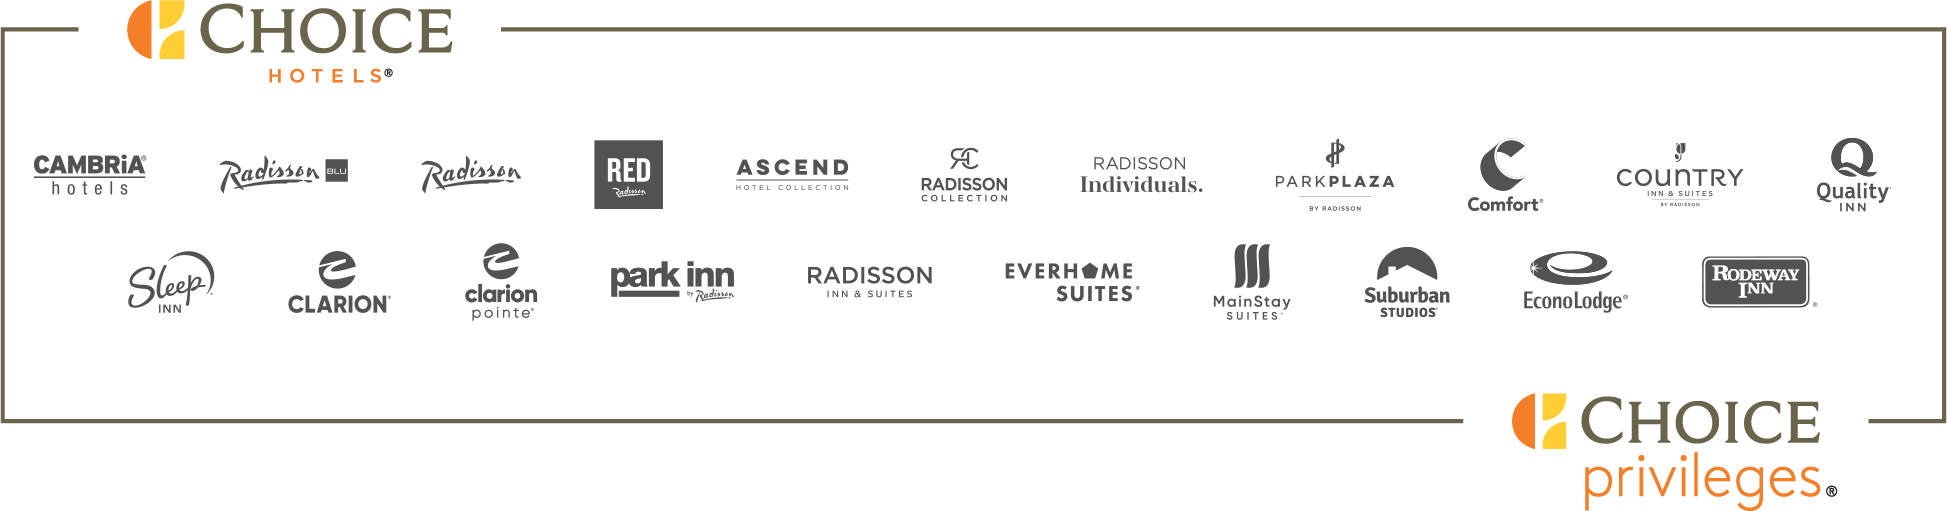 Choice Hotels and Radisson Brand Logos - | CAMBRIA HOTELS | RADISSON BLU | RADISSON | RADISSON RED | ASCEND HOTEL COLLECTION | RADISSON COLLECTION | RADISSION INDIVIDUALS | PARK PLAZA - BY RADISSON | COMFORT | COUNTRY INN & SUITES - BY RADISSON | QUALITY INN | SLEEP INN | CLARION | CLARION POINTE | PARK INN - BY RADISSON | RADISSION INN & SUITES | EVERHOME SUITES | MAINSTAY SUITES | SUBURBAN STUDIOS | ECONOLODGE | RODEWAY INN |